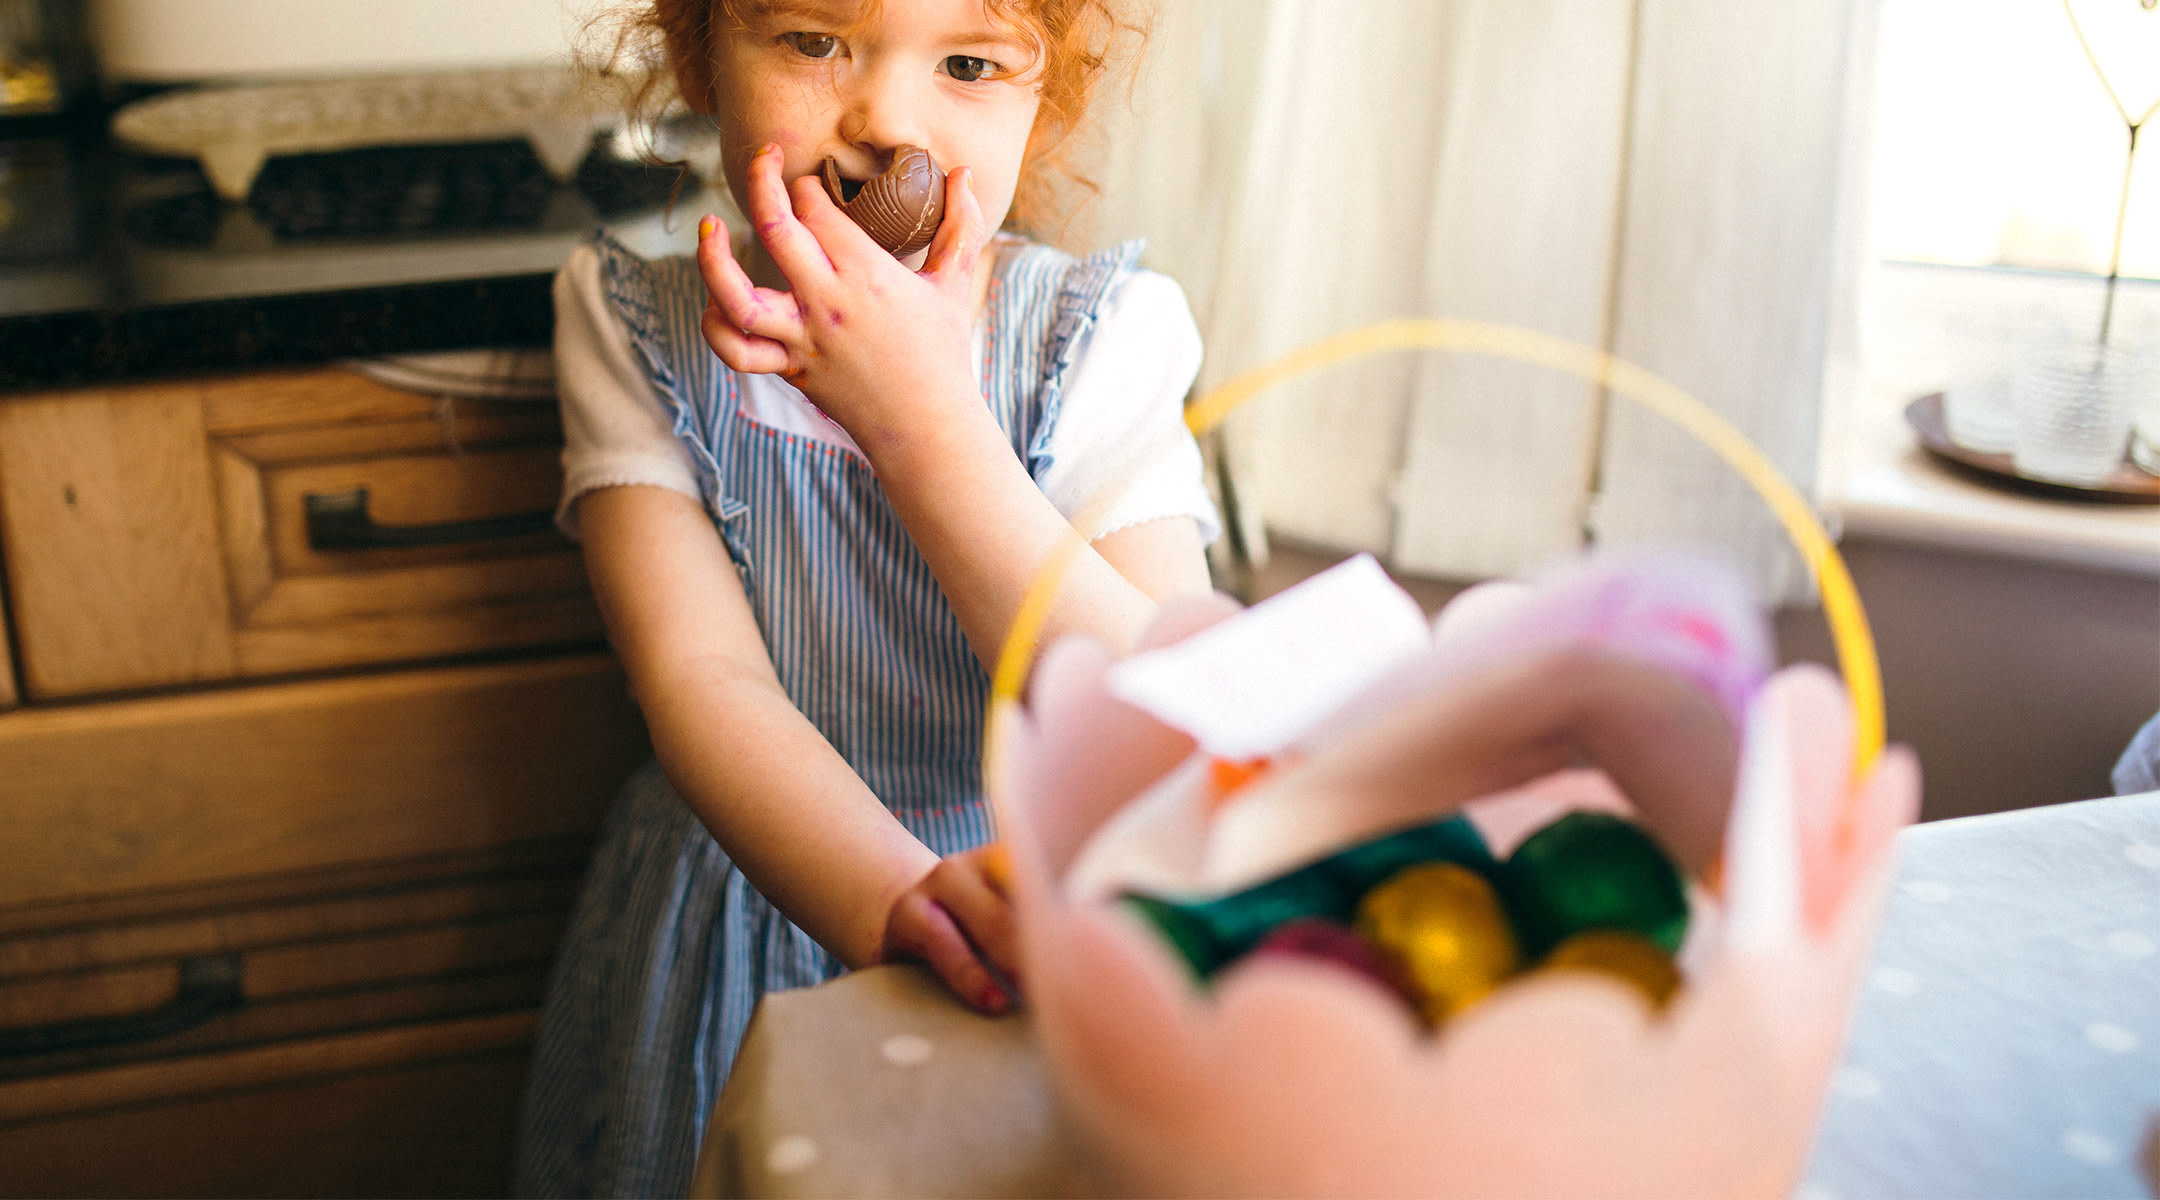 little girl eating her easter basket chocolate